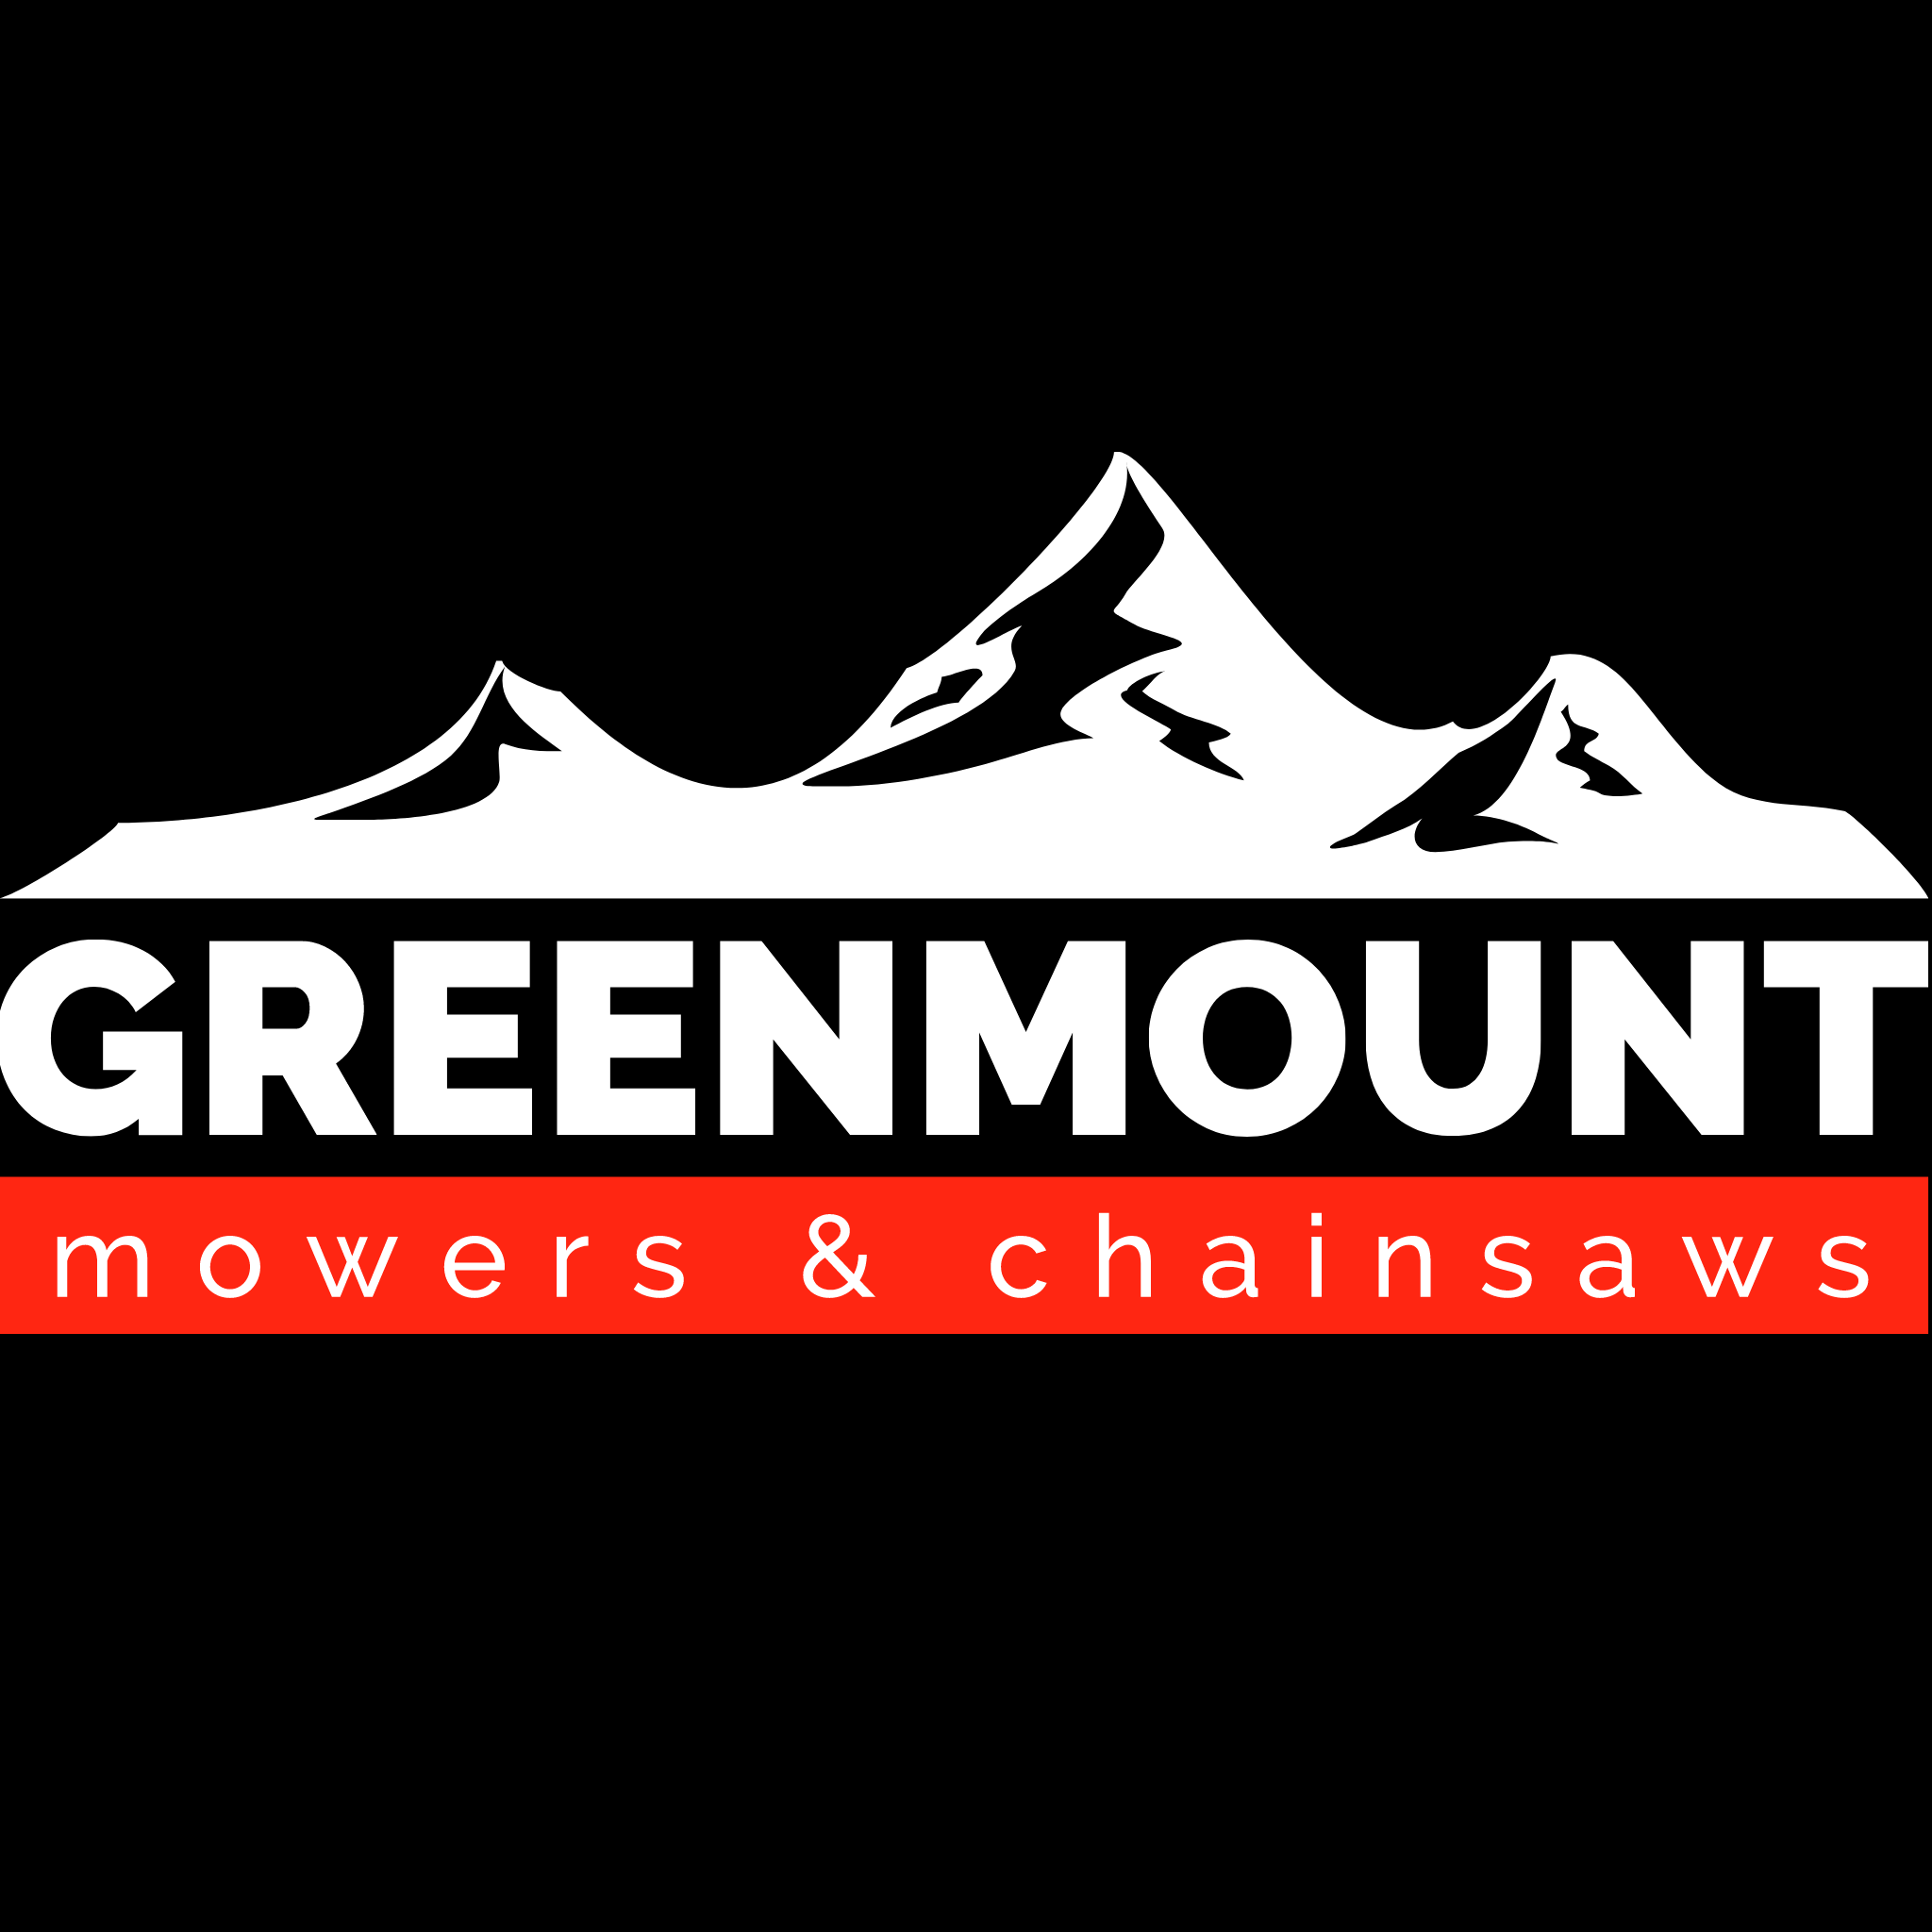 Greenmount Mowers & Chainsaws